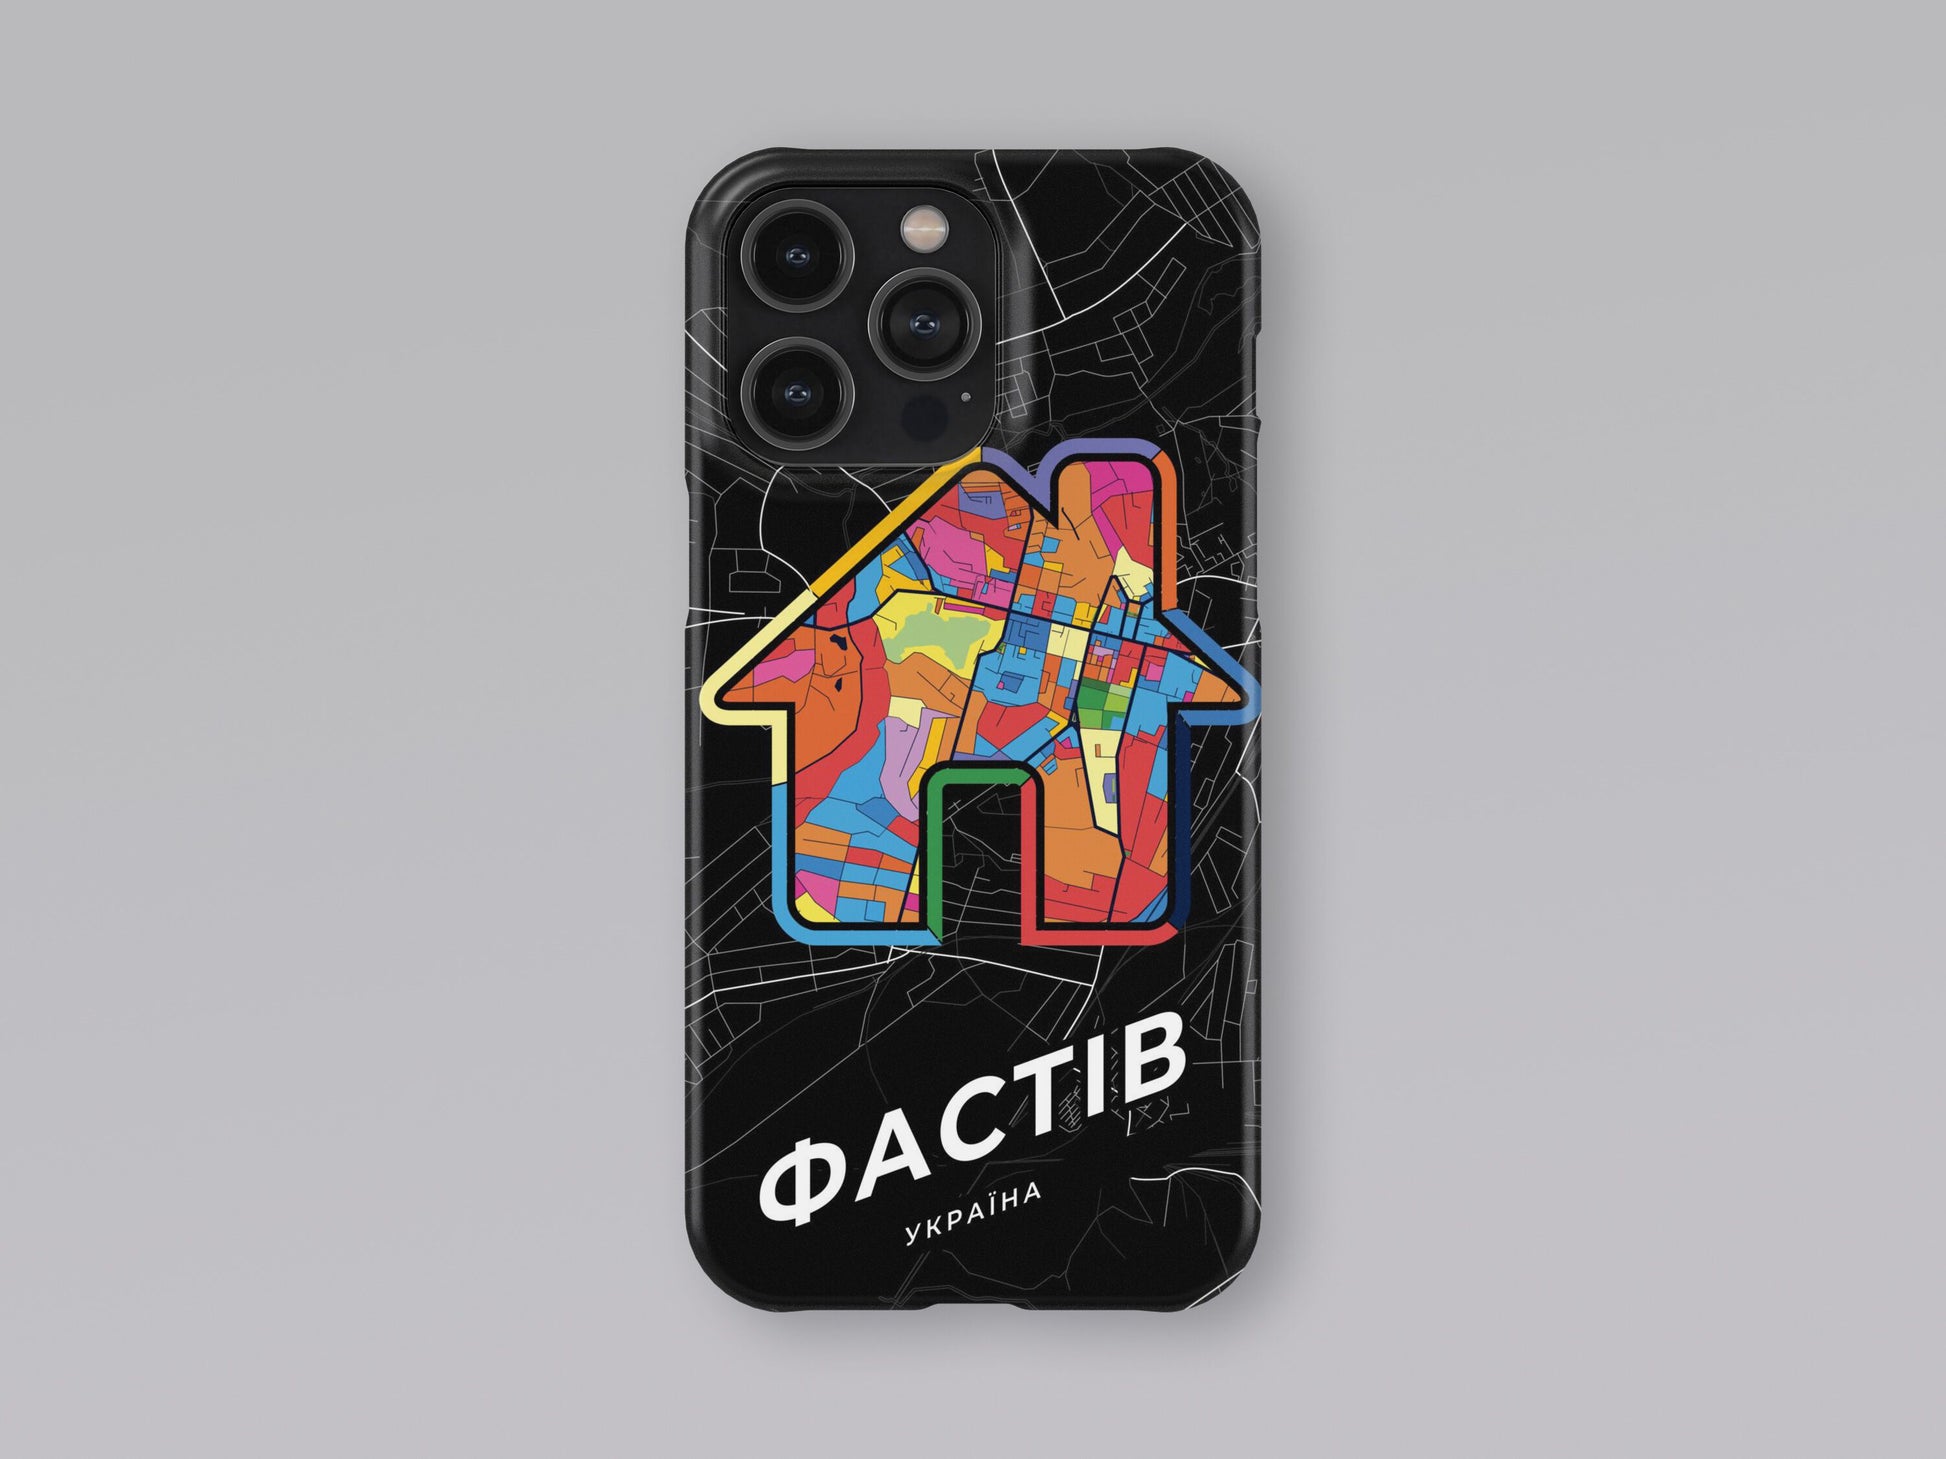 Fastiv Ukraine slim phone case with colorful icon. Birthday, wedding or housewarming gift. Couple match cases. 3